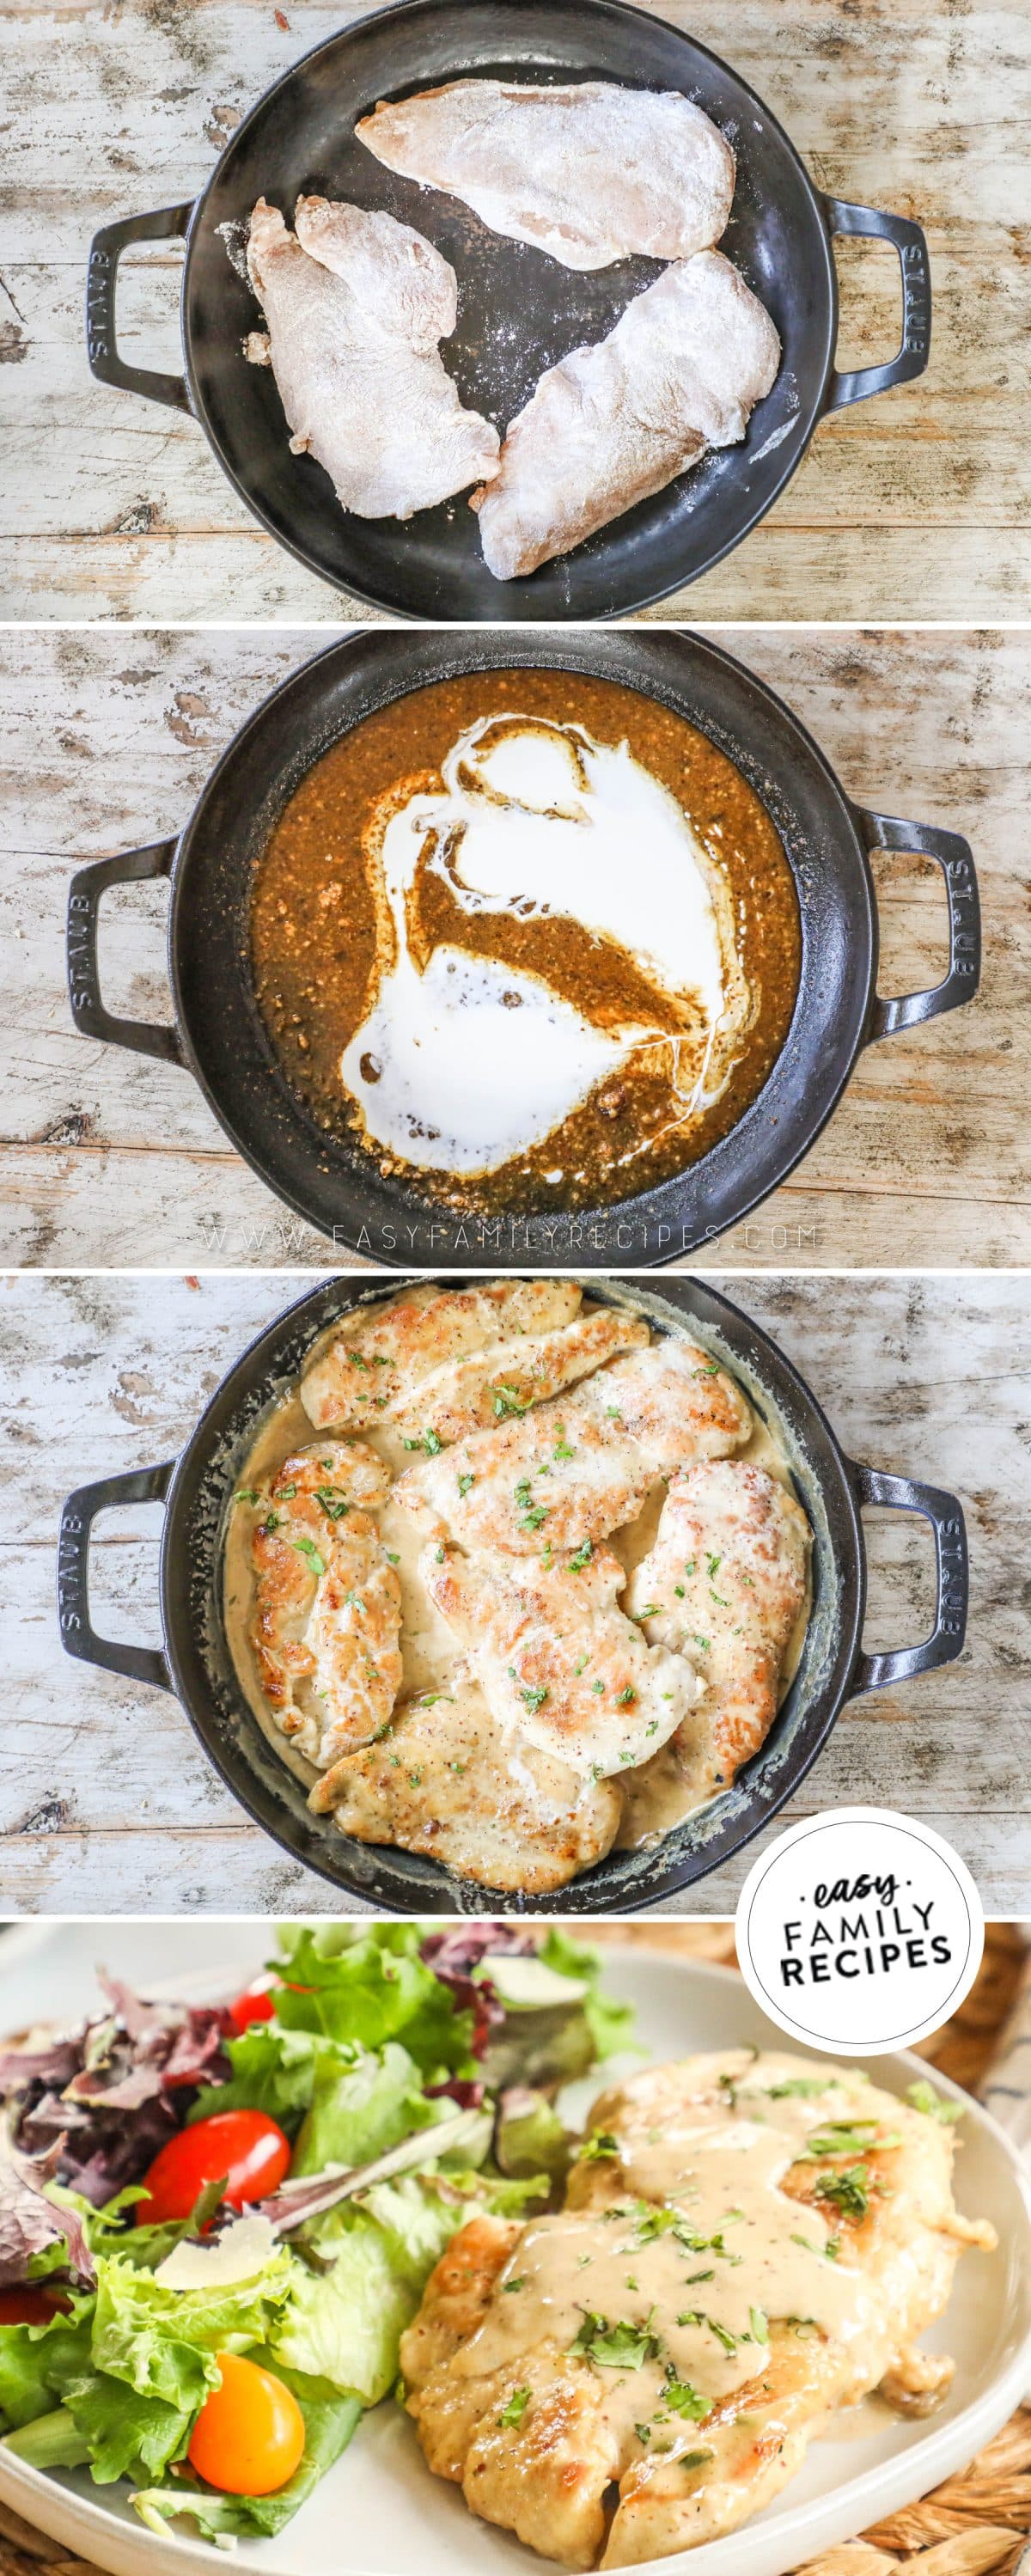 How to make Creamy Dijon chicken 1)sear chicken 2)make sauce 3)simmer together 4)serve.